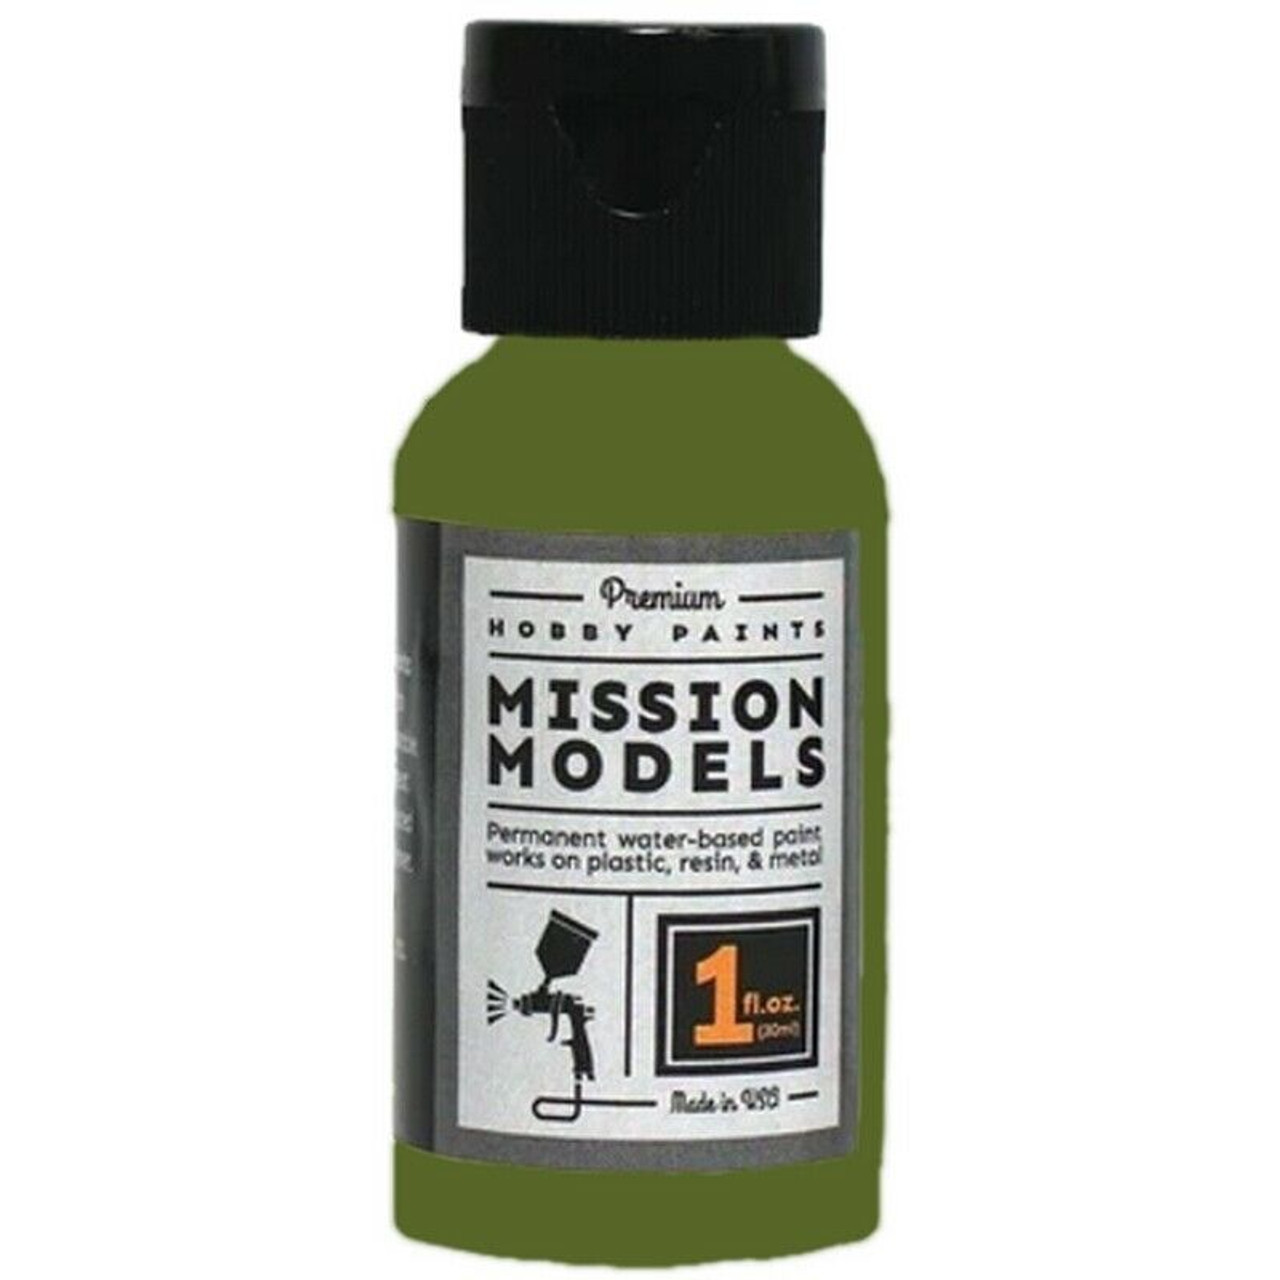 Mission Models MIOMMP-009 Acrylic Model Paint 1oz Bottle, Olivgrun Olive Green